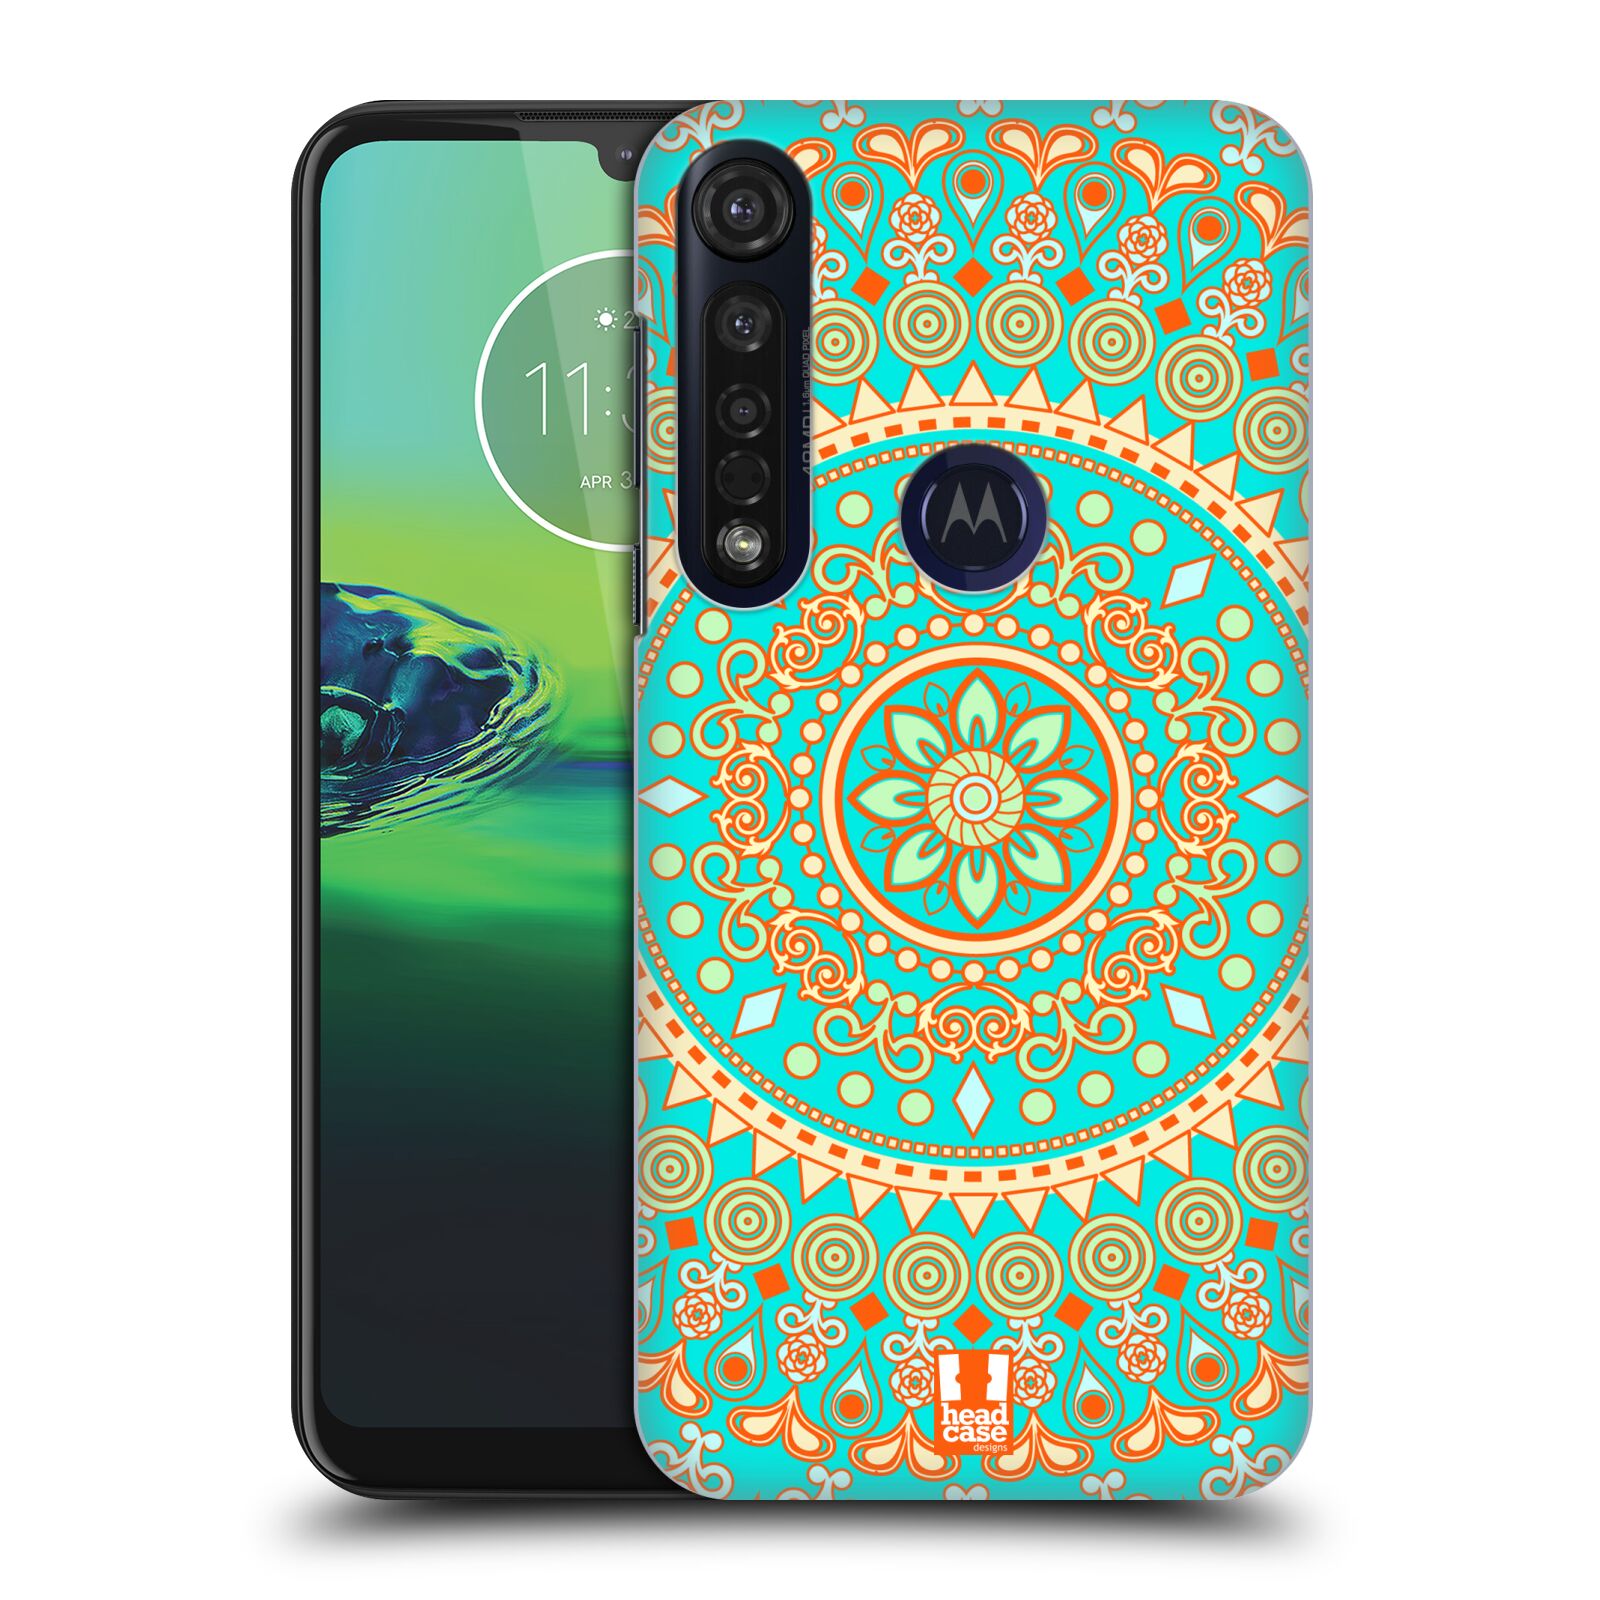 Pouzdro na mobil Motorola Moto G8 PLUS - HEAD CASE - vzor Indie Mandala slunce barevný motiv TYRKYSOVÁ, ZELENÁ